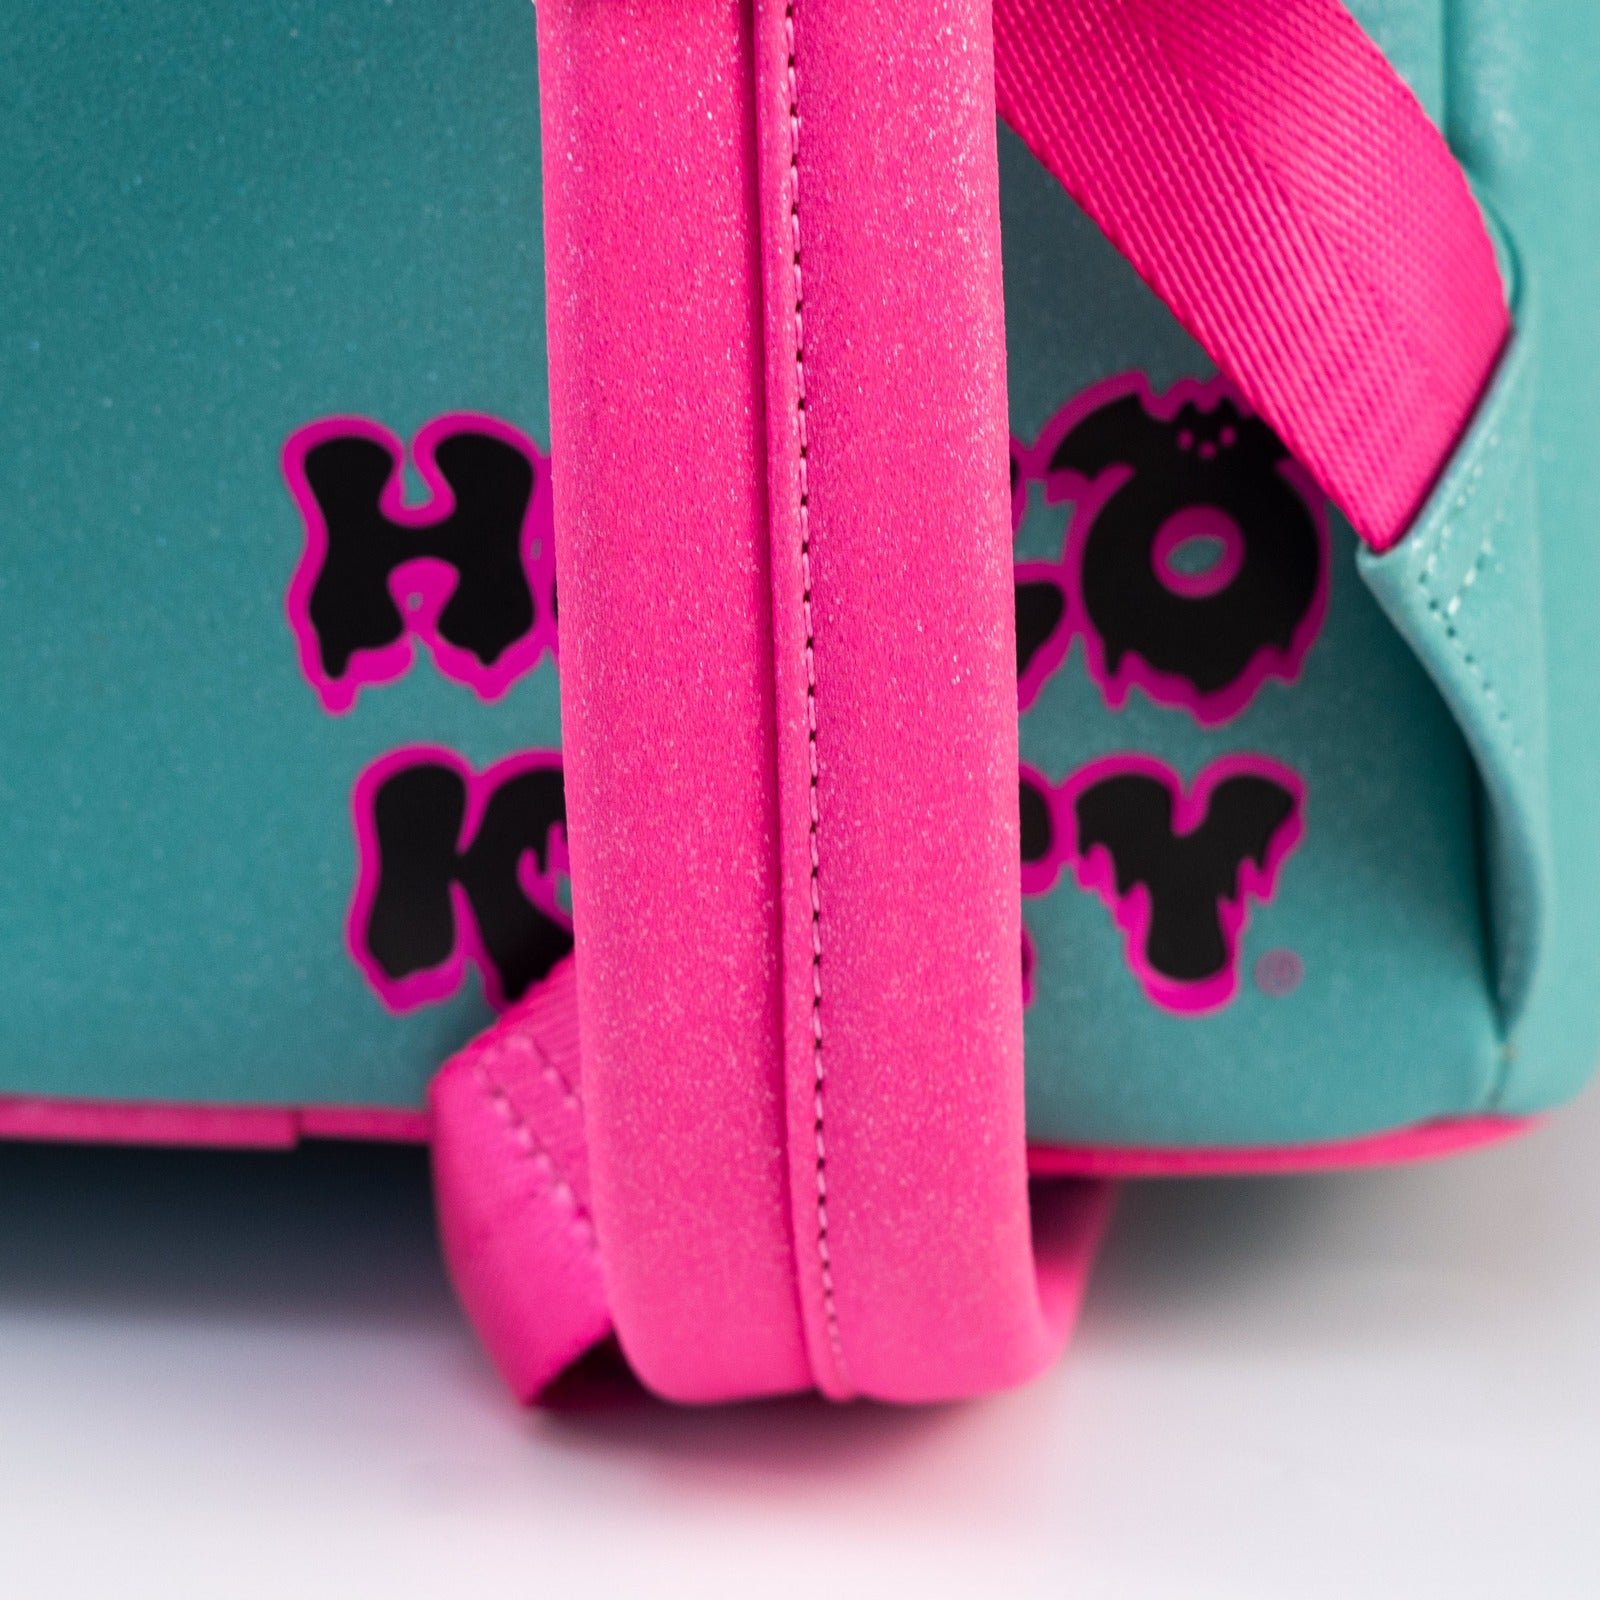 Loungefly x Sanrio Hello Kitty Zombie Pumpkin Cosplay Mini Backpack